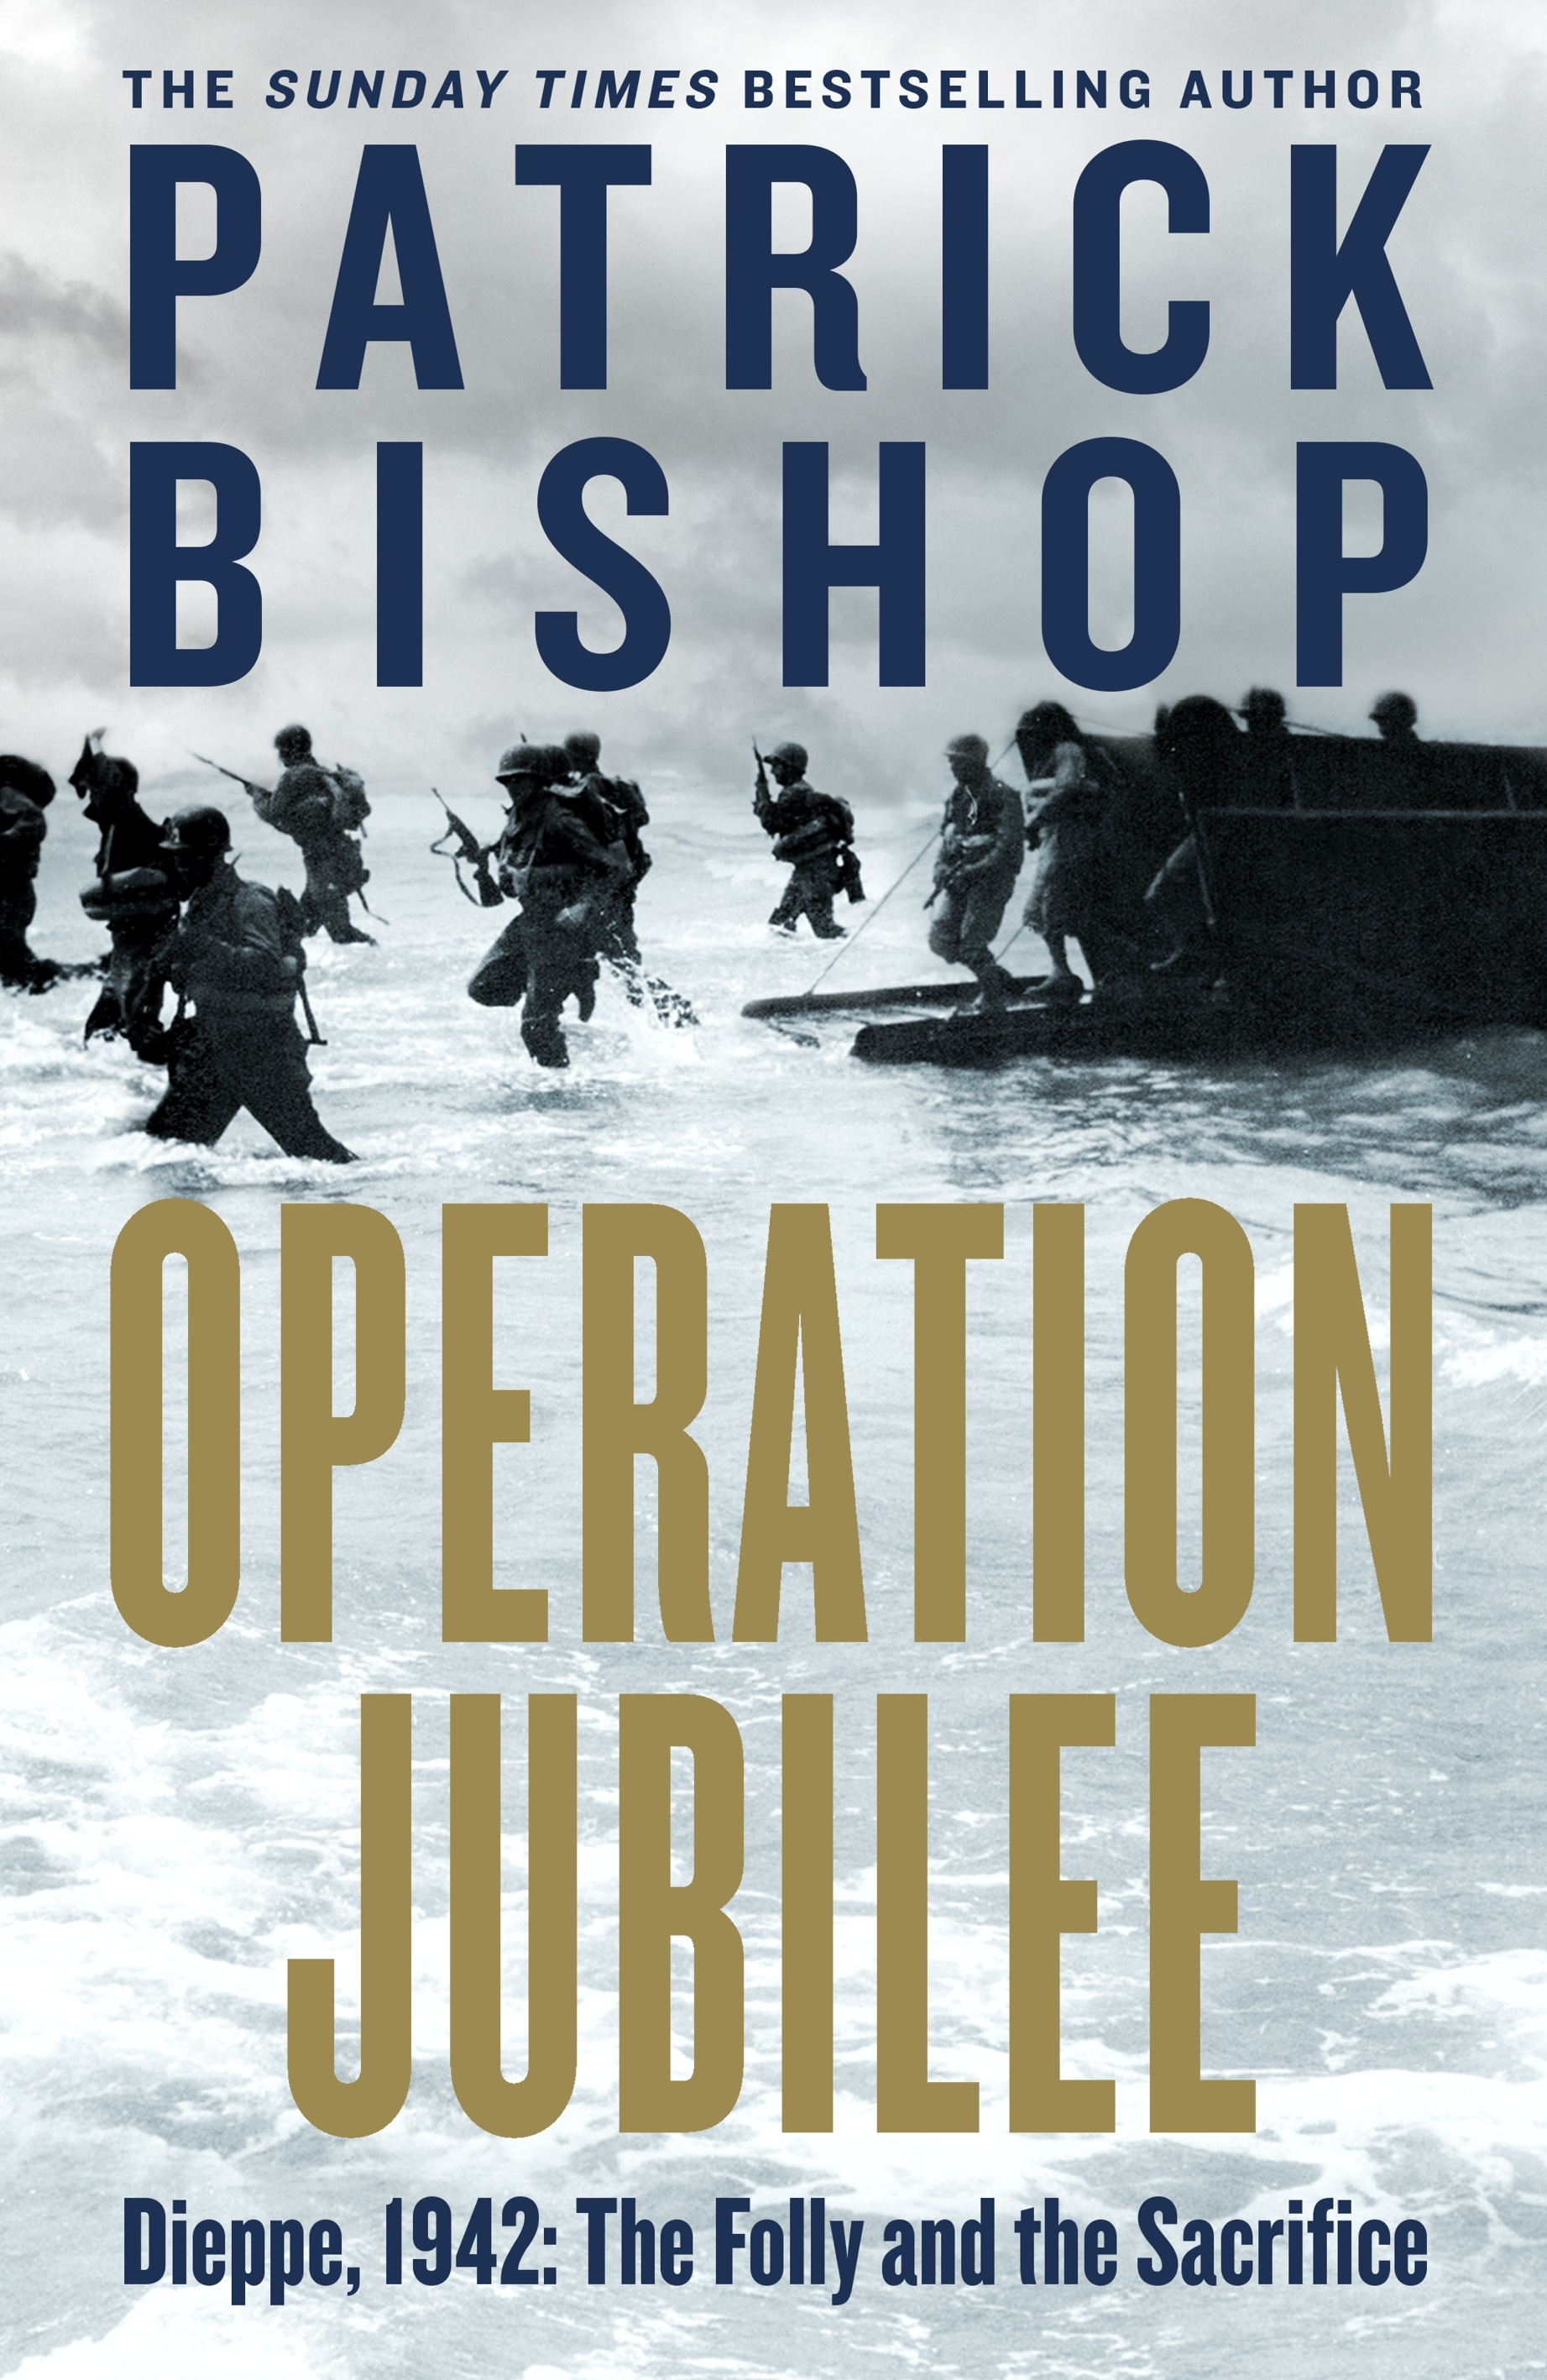 Book “Operation Jubilee” by Patrick Bishop — October 14, 2021